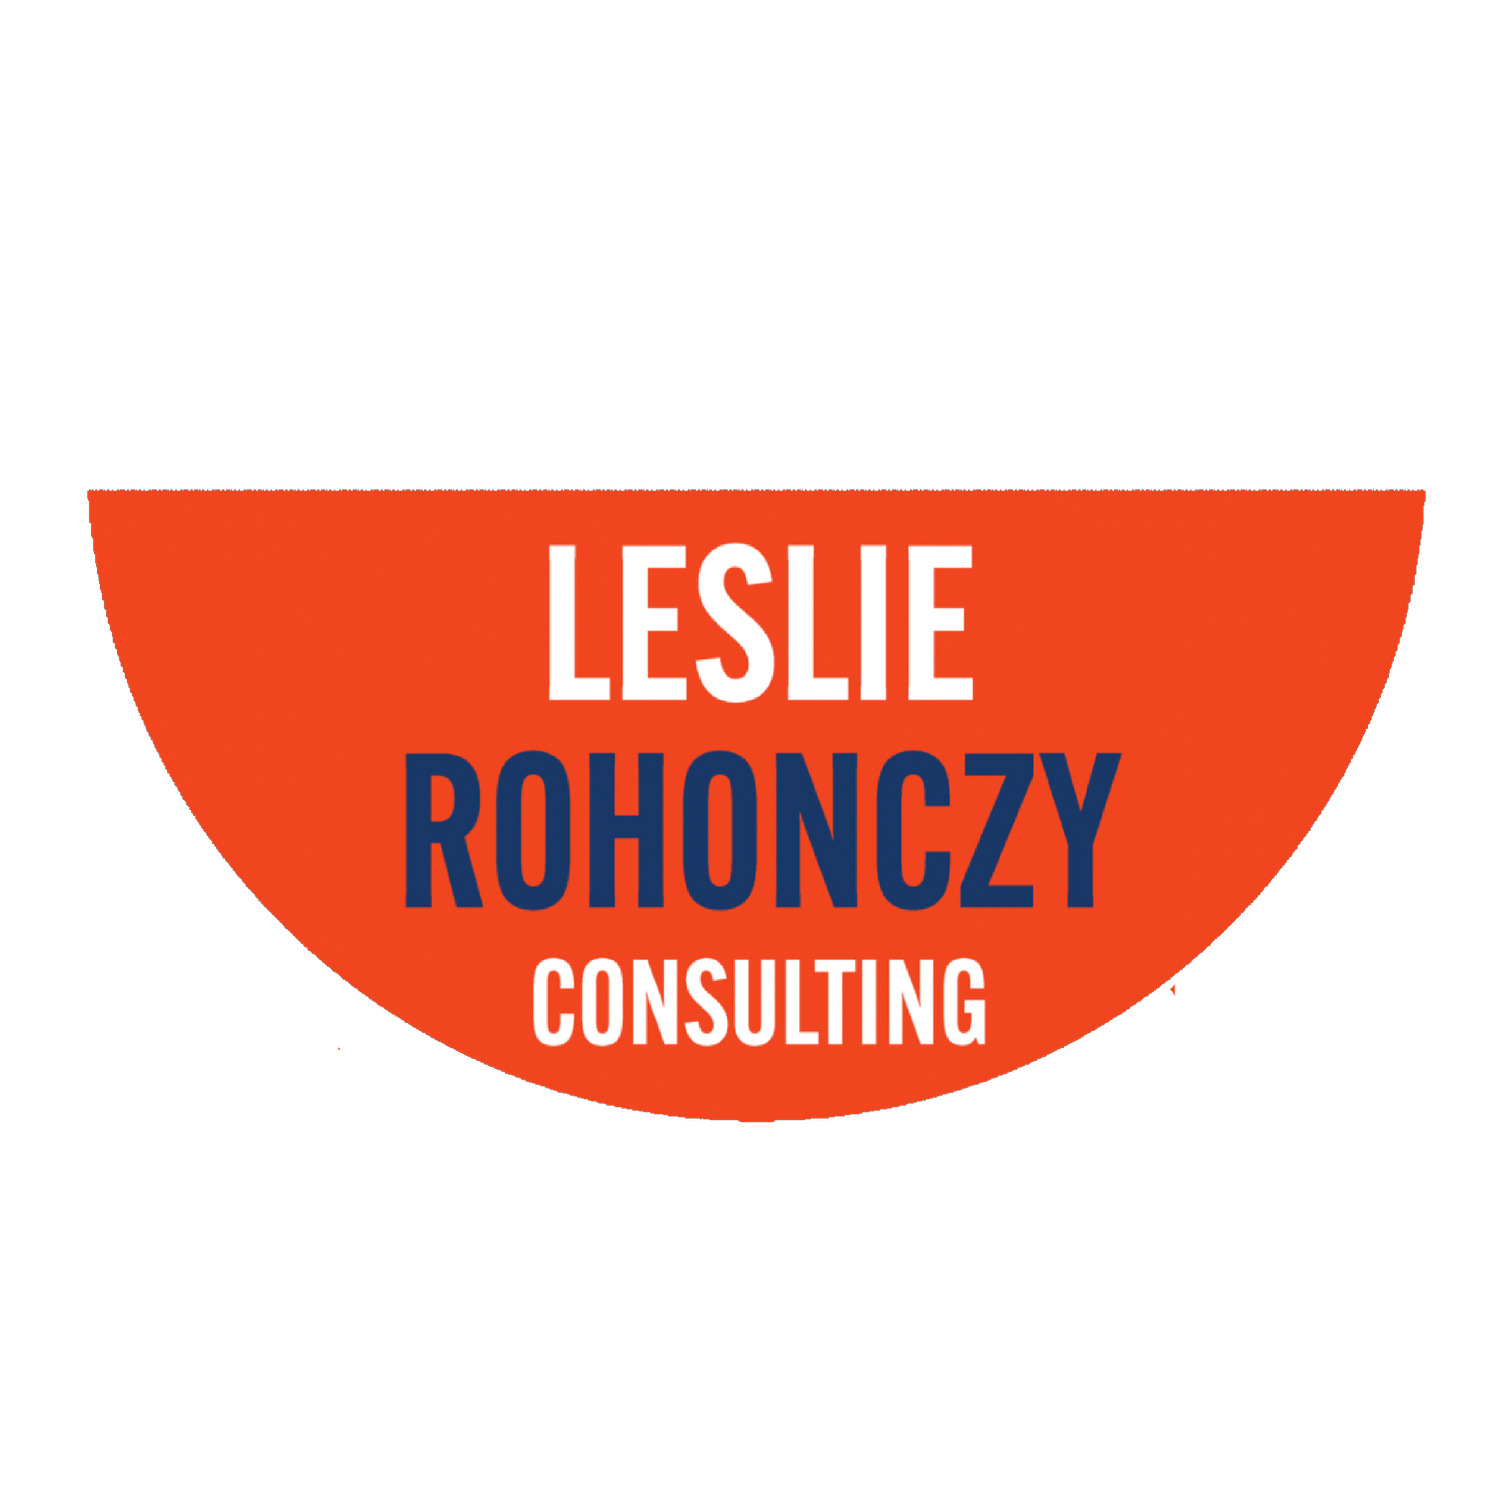 LESLIE ROHONCZY CONSULTING